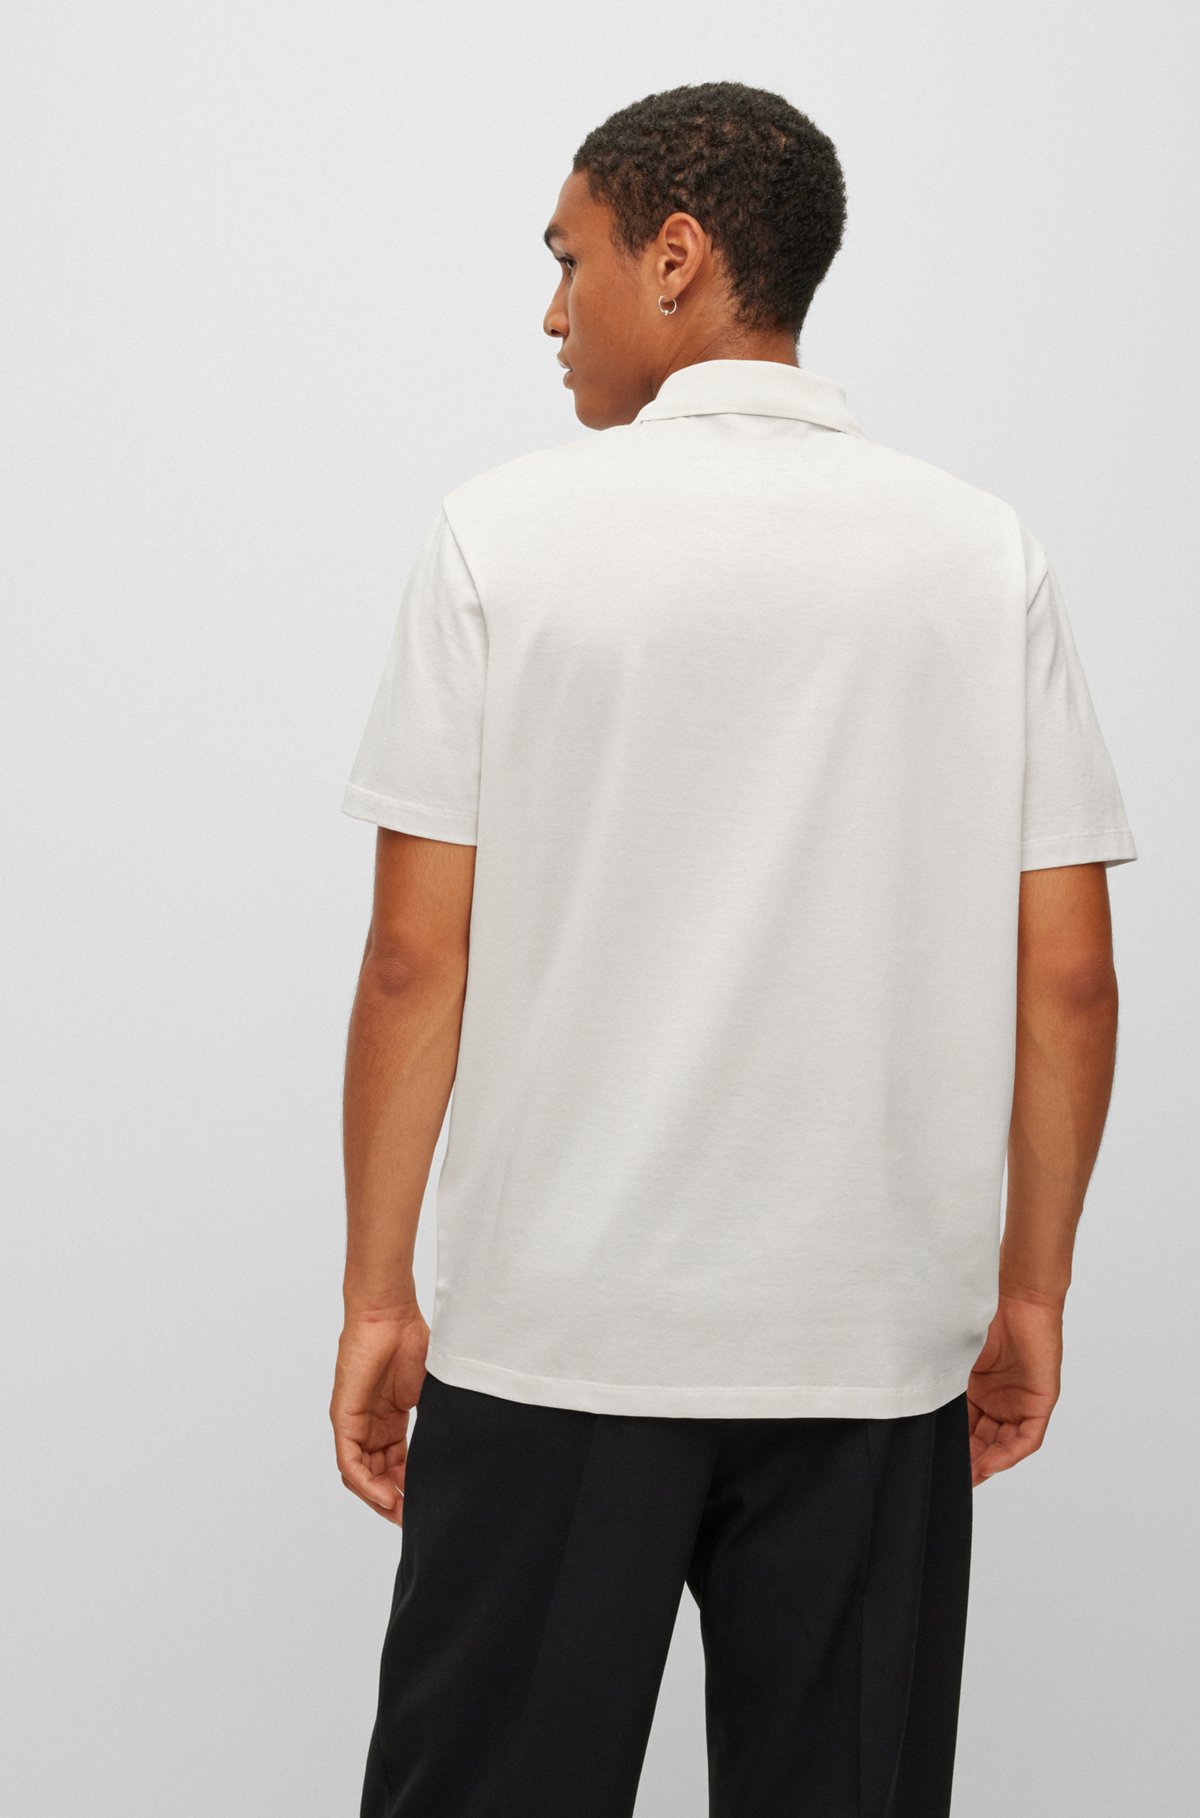 HUGO - Mercerised-cotton polo shirt with zip placket